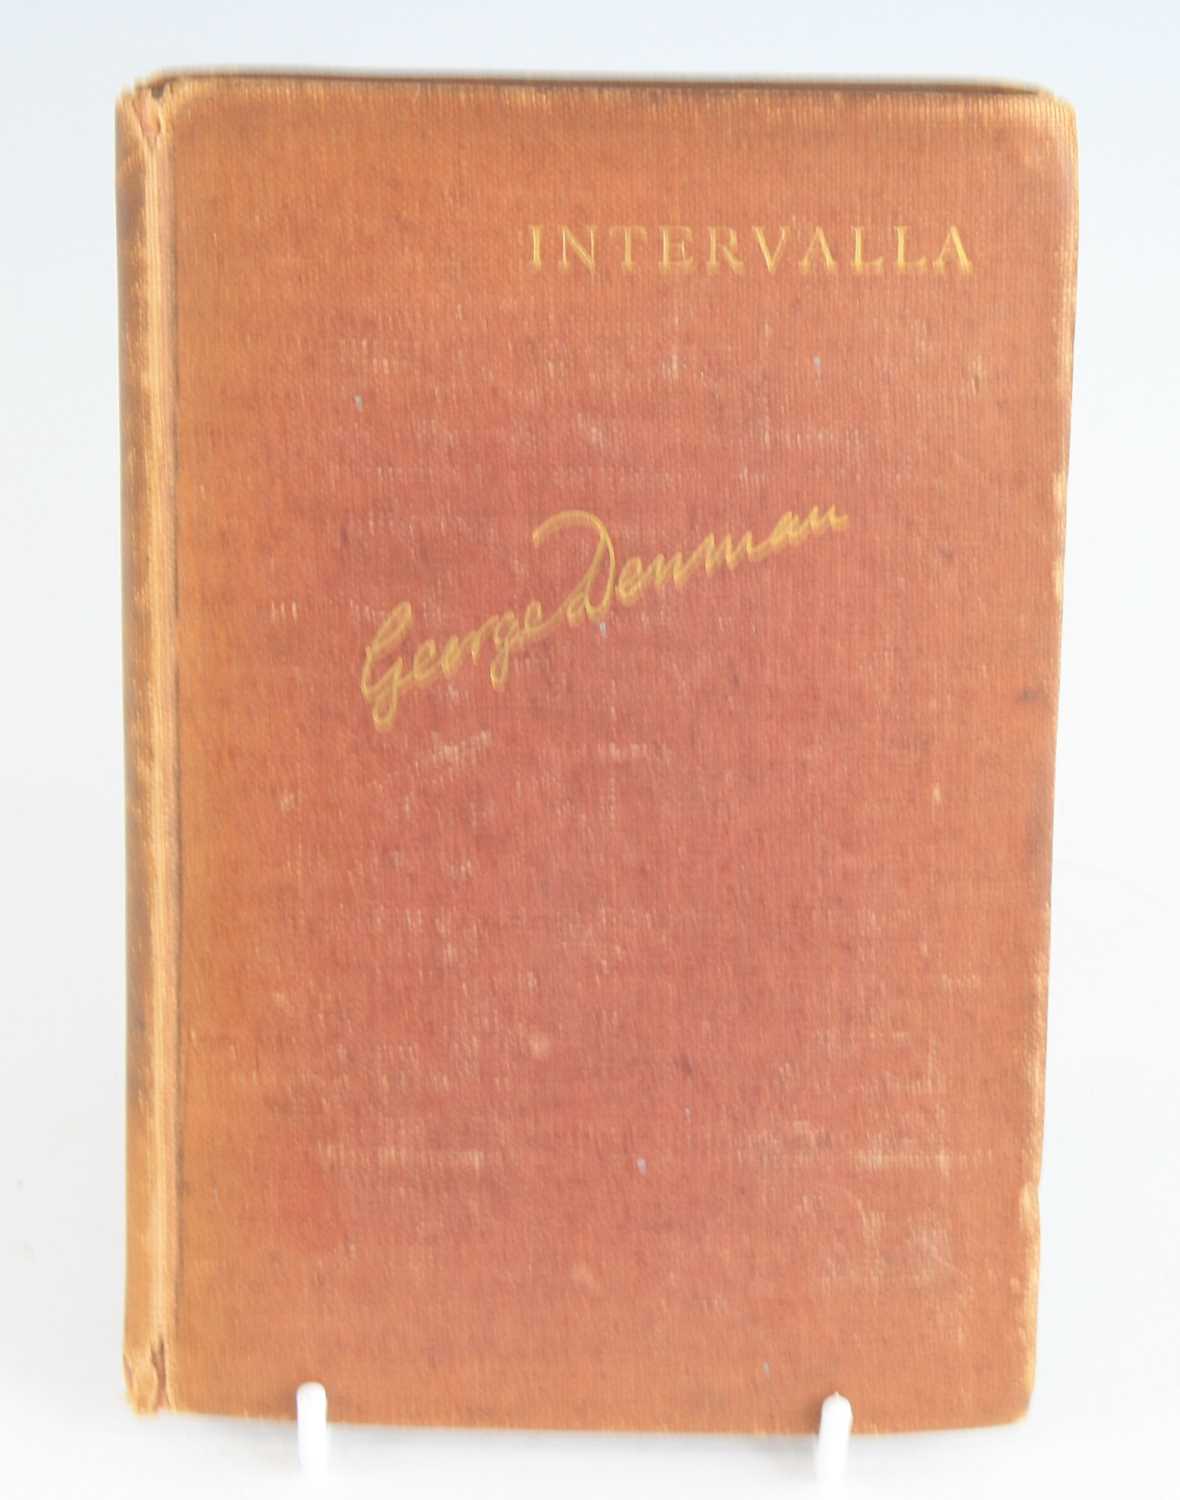 Denman, George: Intervalla, Verses Greek, Latin And English, For Private Circulation, Cambridge: